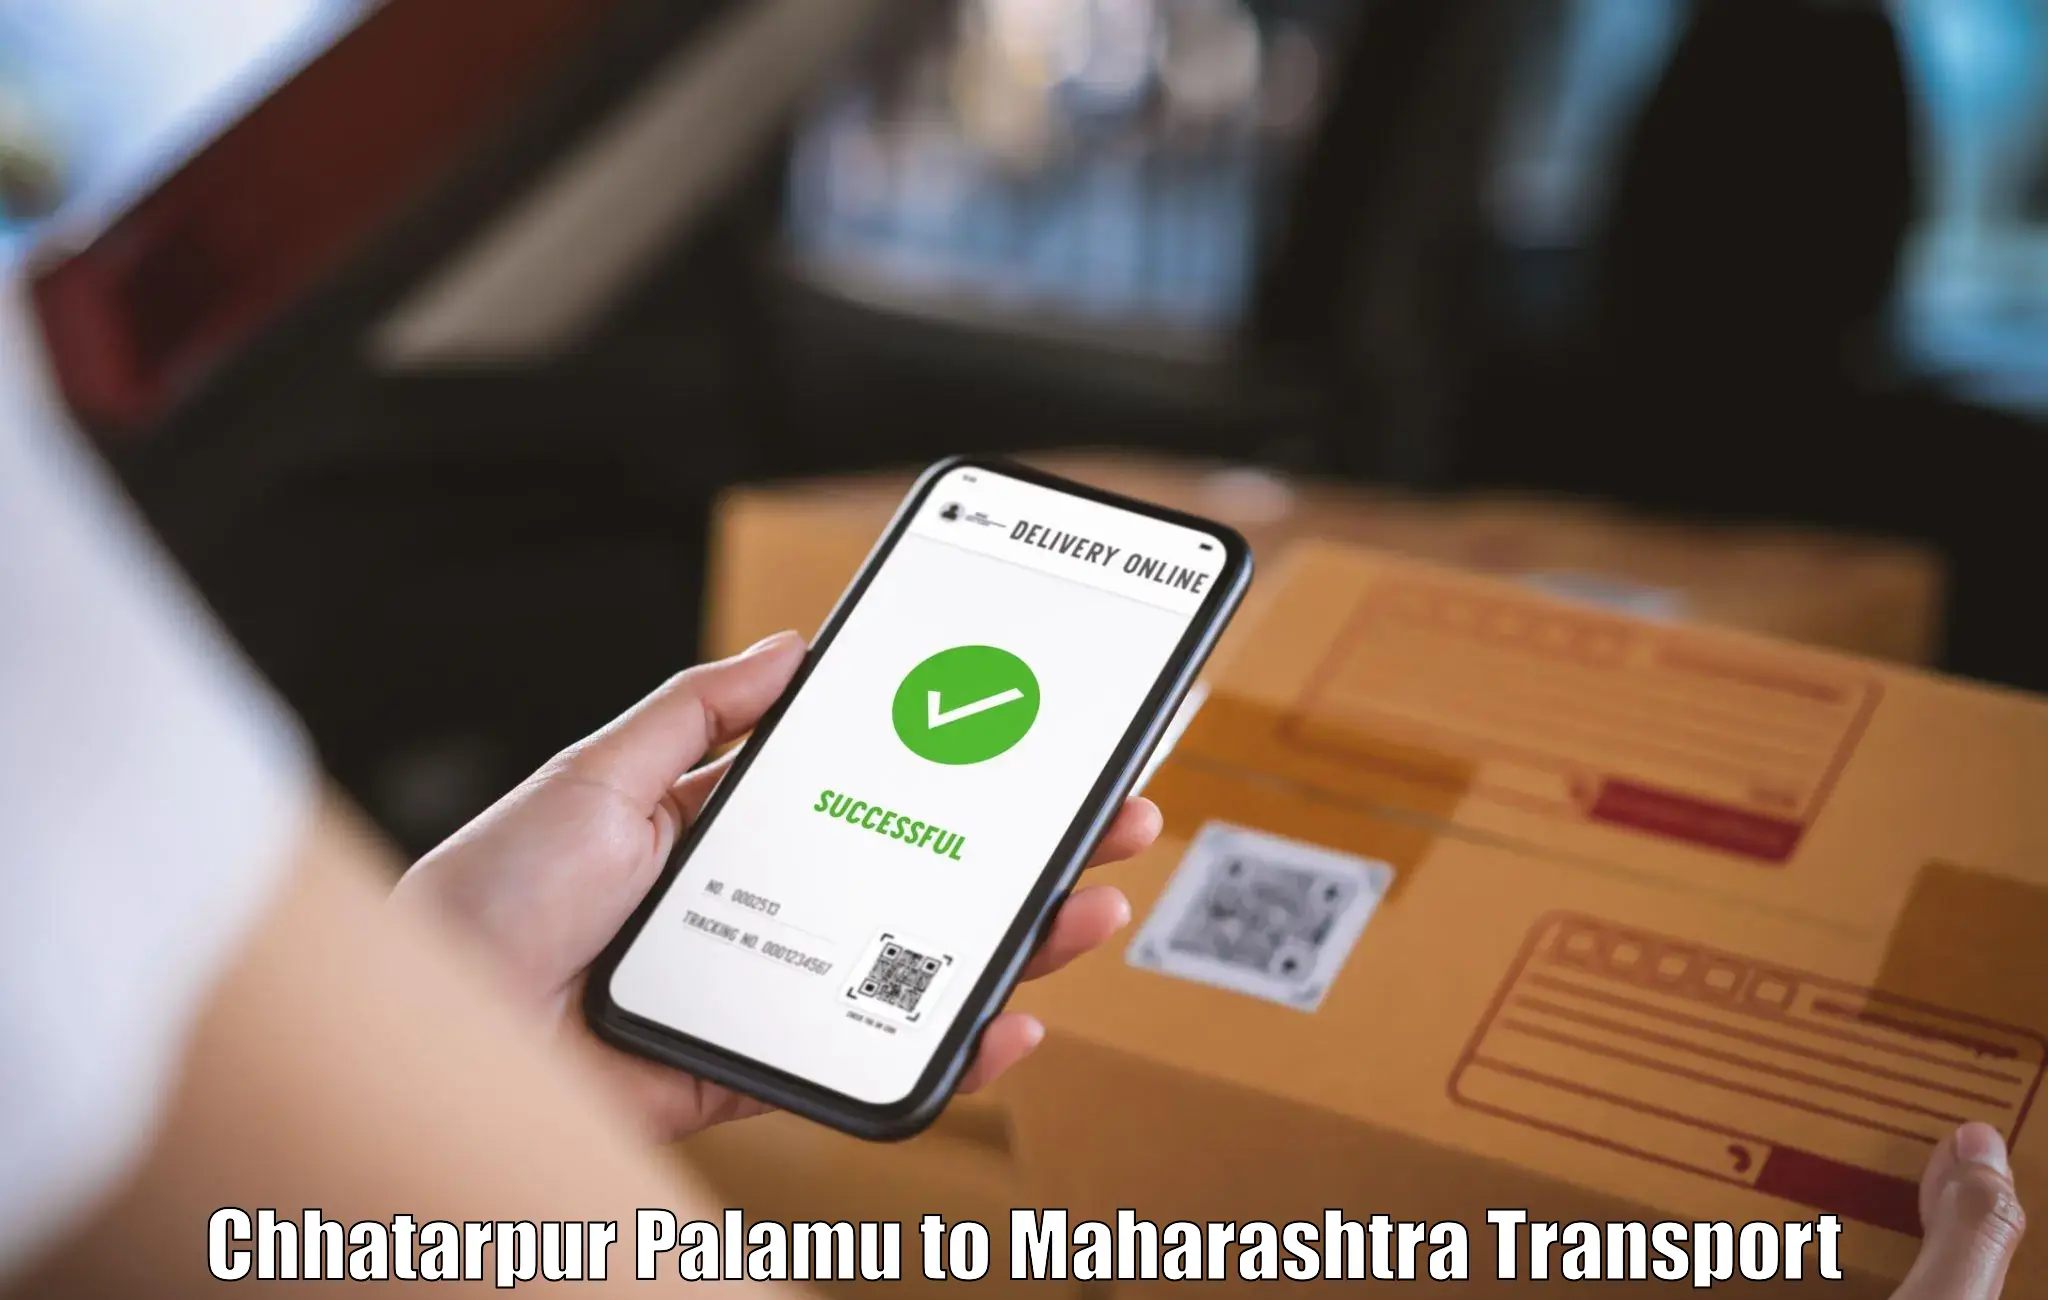 Transport bike from one state to another Chhatarpur Palamu to Maharashtra